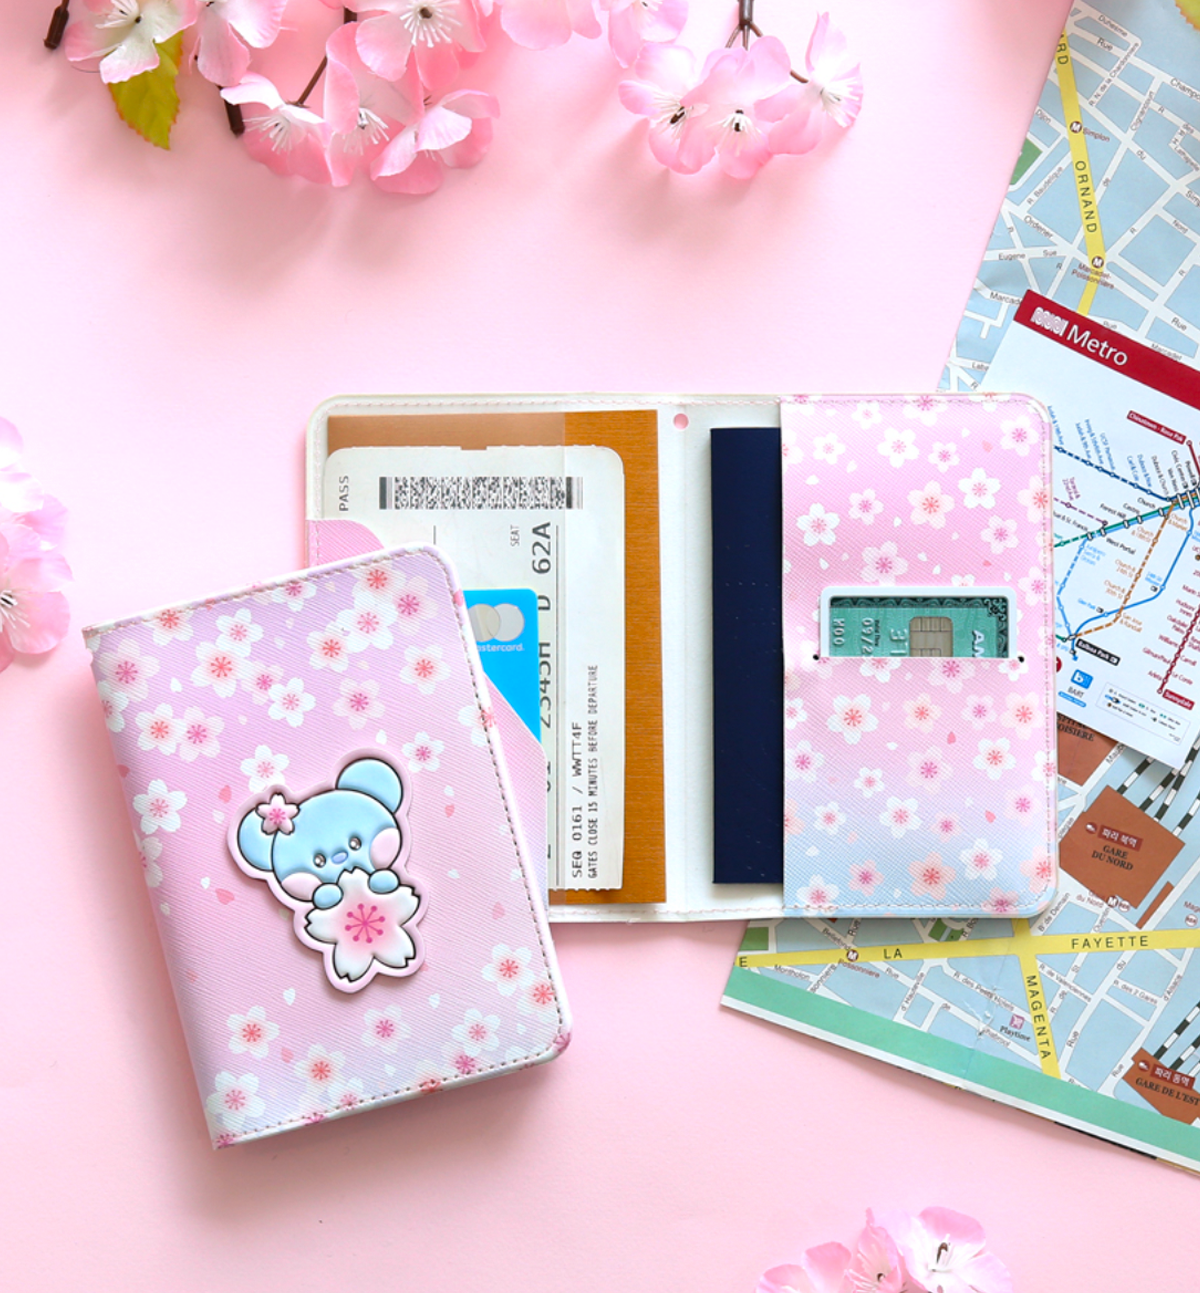 BT21 Cherry Blossom Passport Cover [Chimmy]